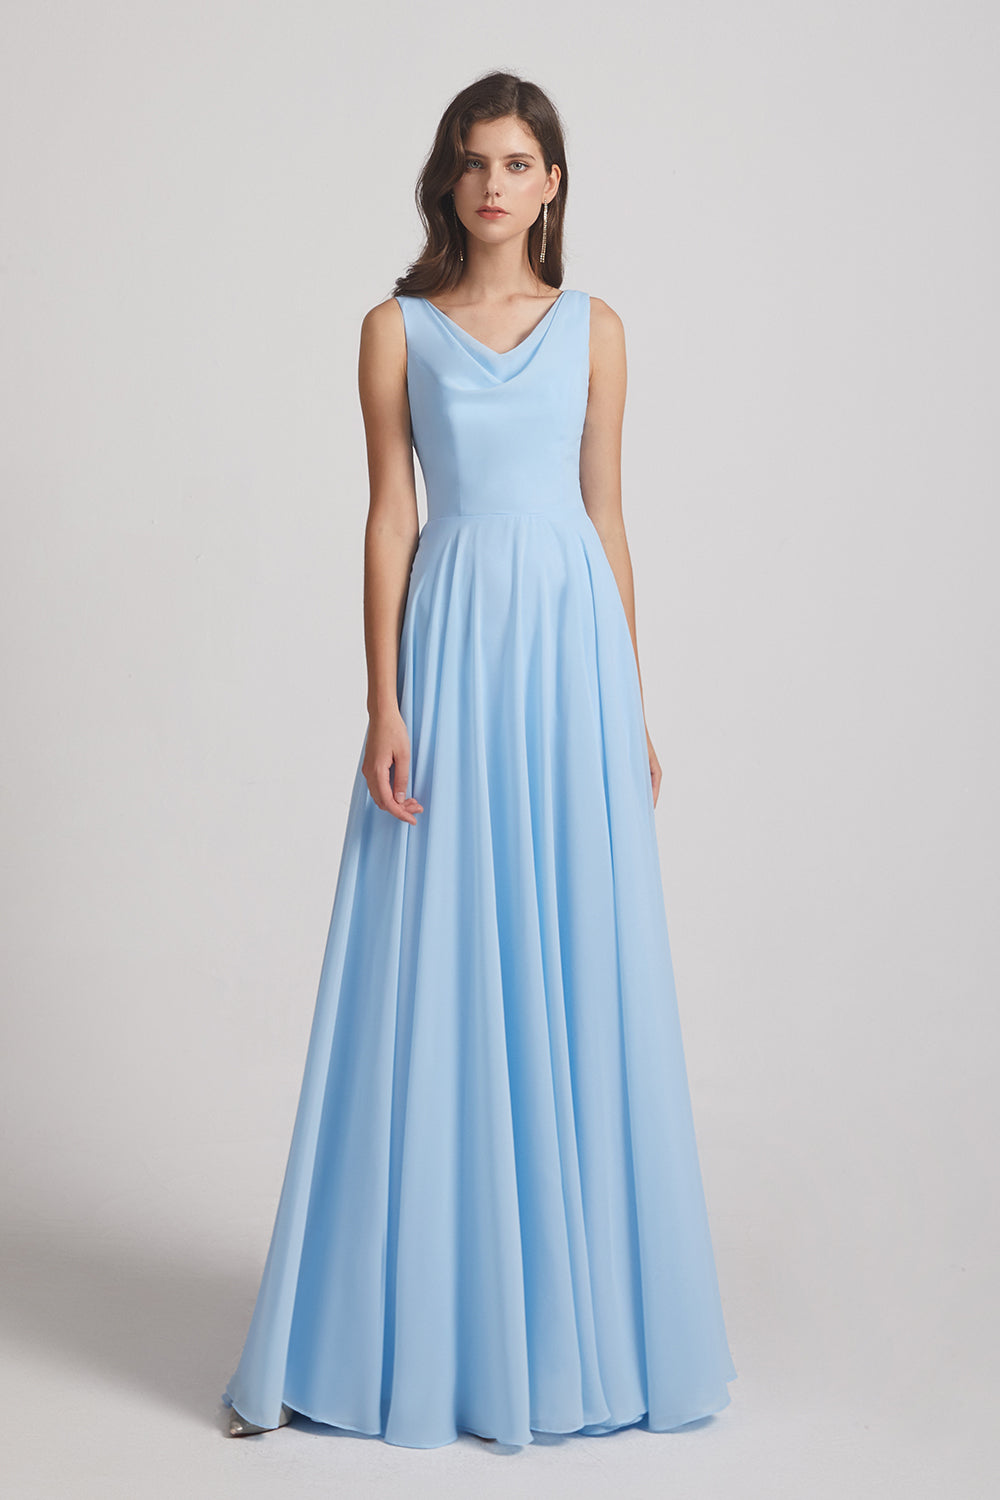 sky blue sleeveless chiffon gowns